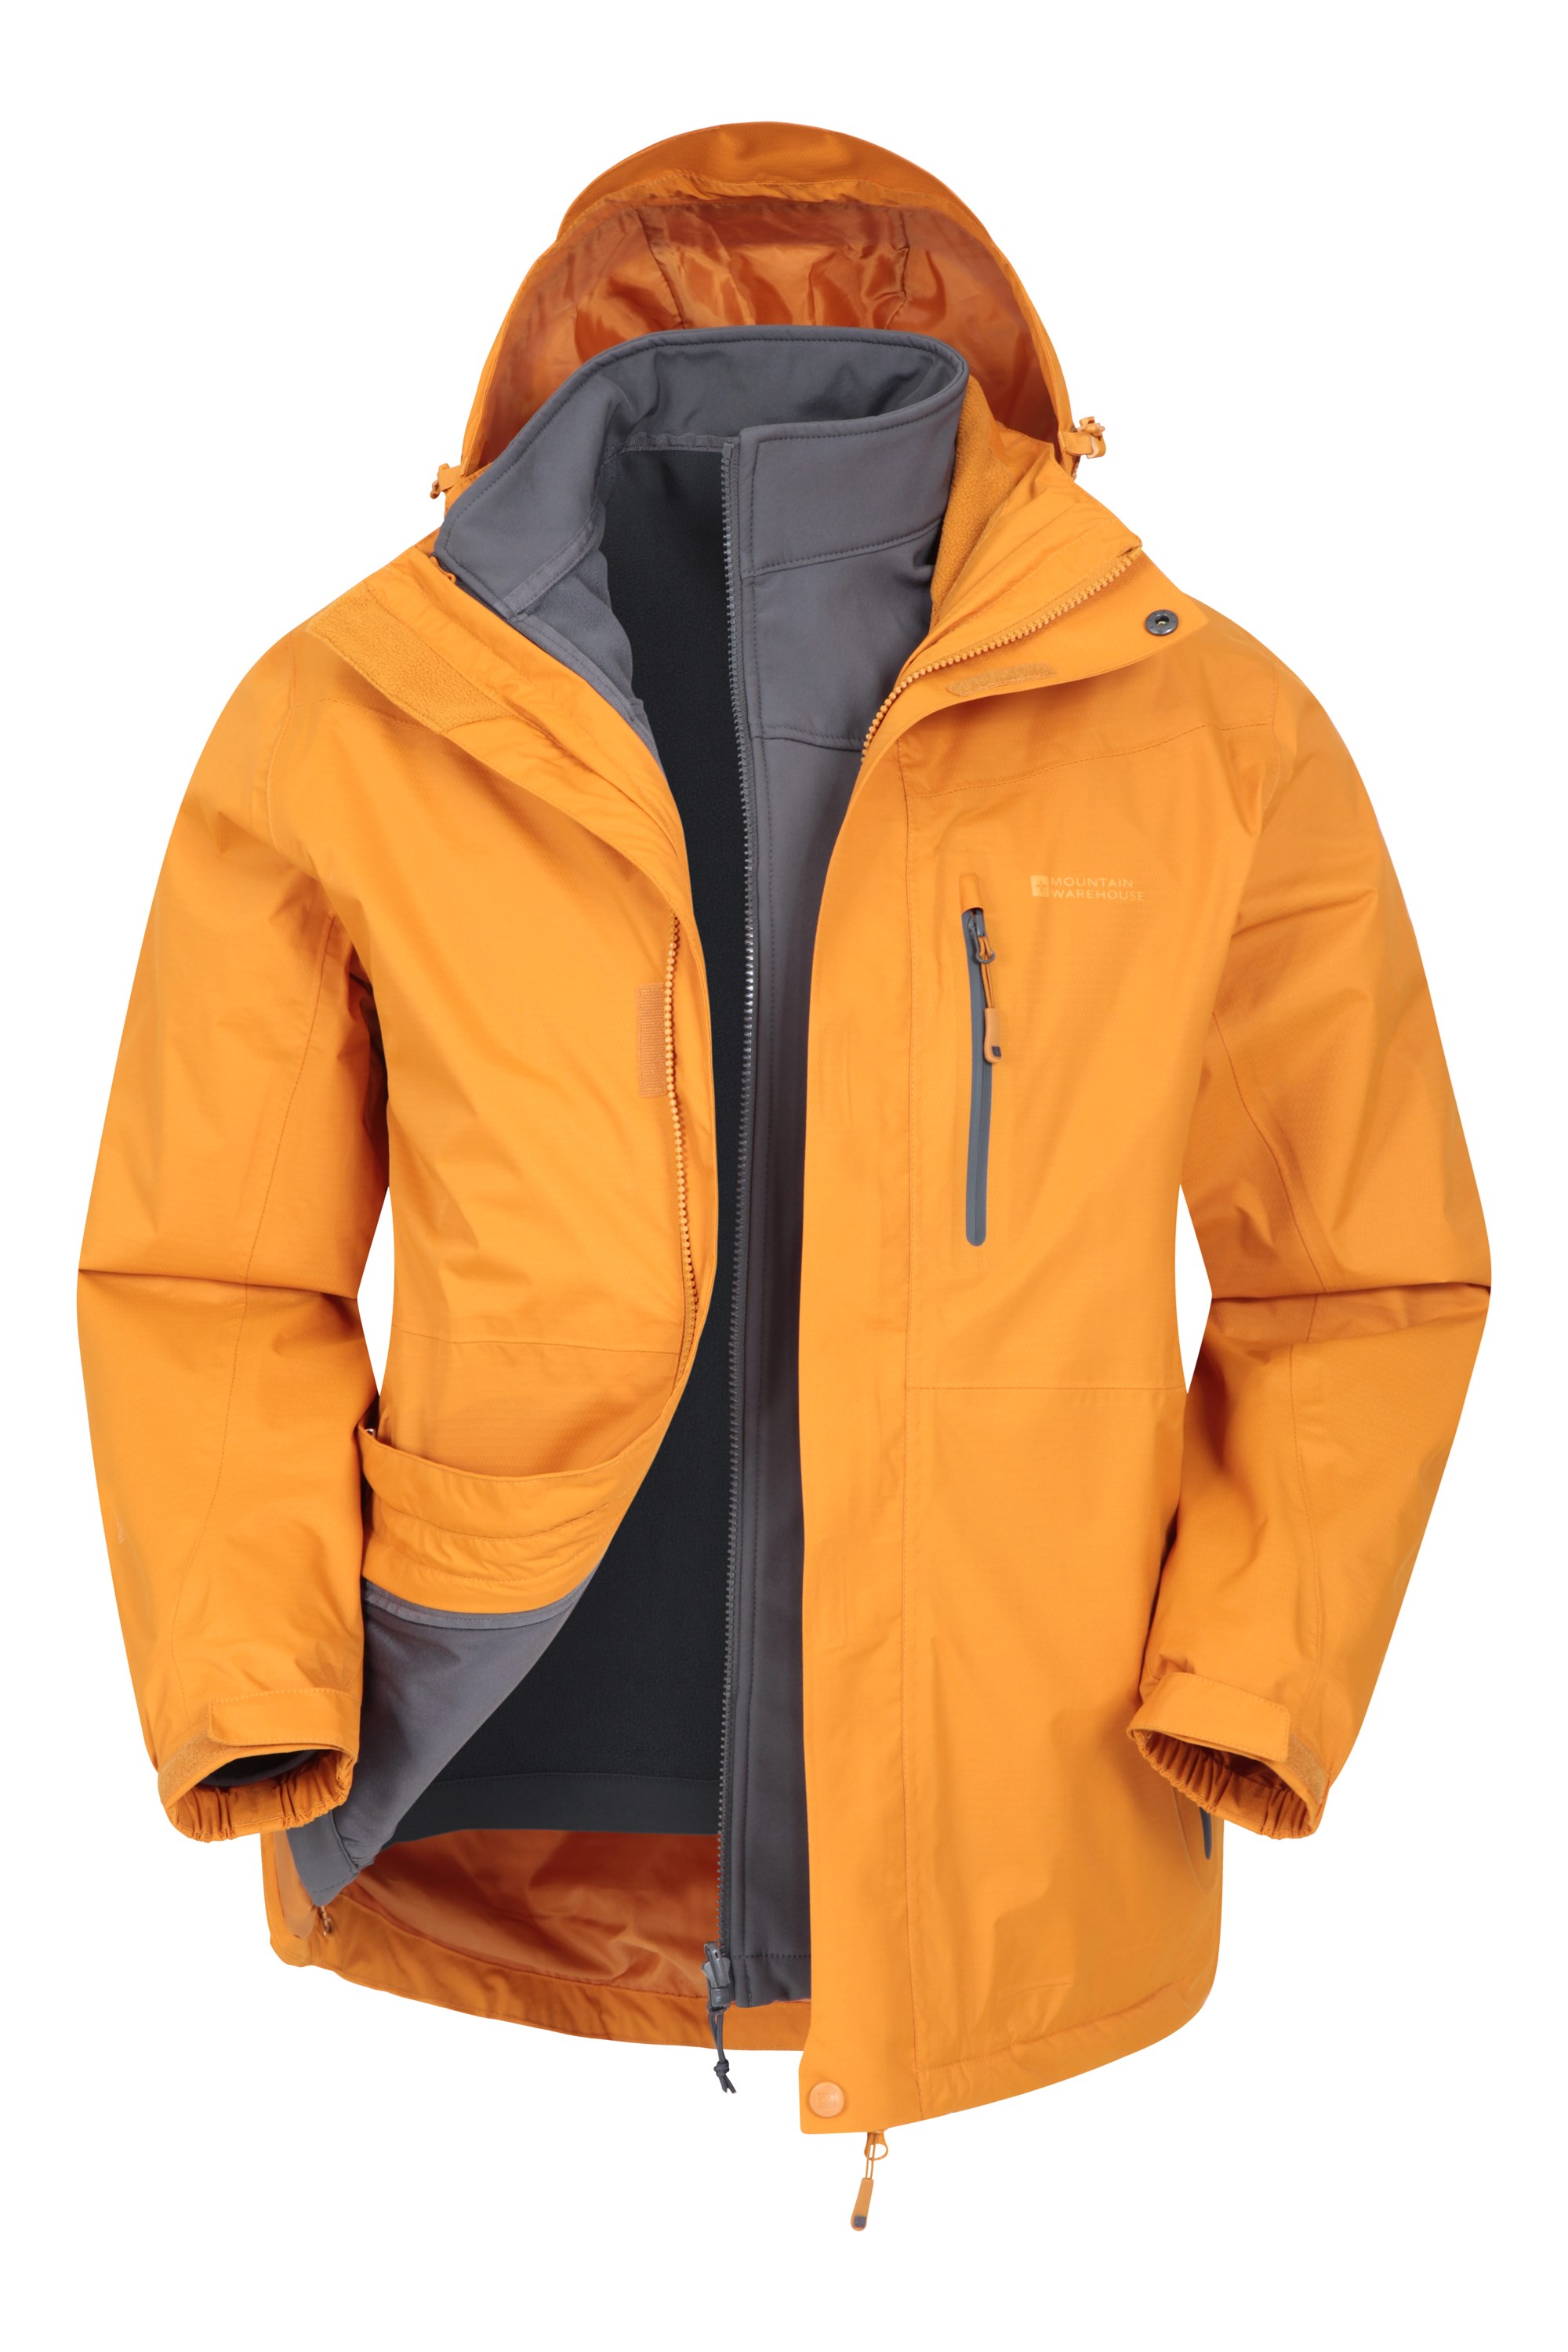 Details about   Mountain Warehouse Mens Waterproof Down Parka Jacket Winter Rain Coat 